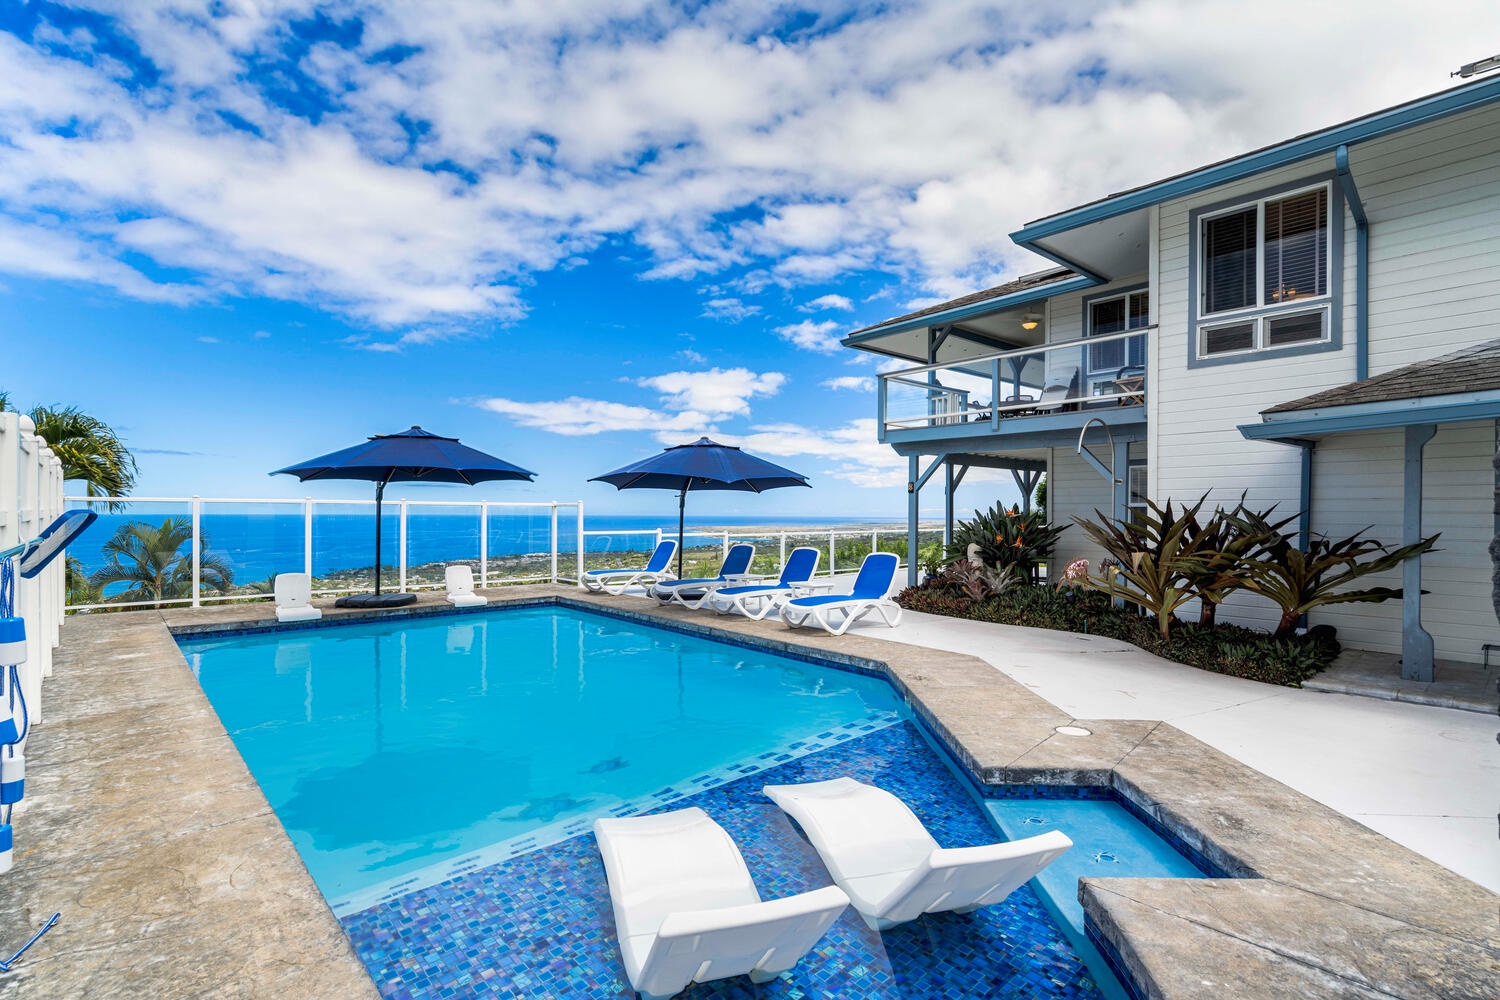 Kailua Kona Vacation Rentals, Honu O Kai (Turtle of the Sea) - The pool offers chaise loungers to relax.